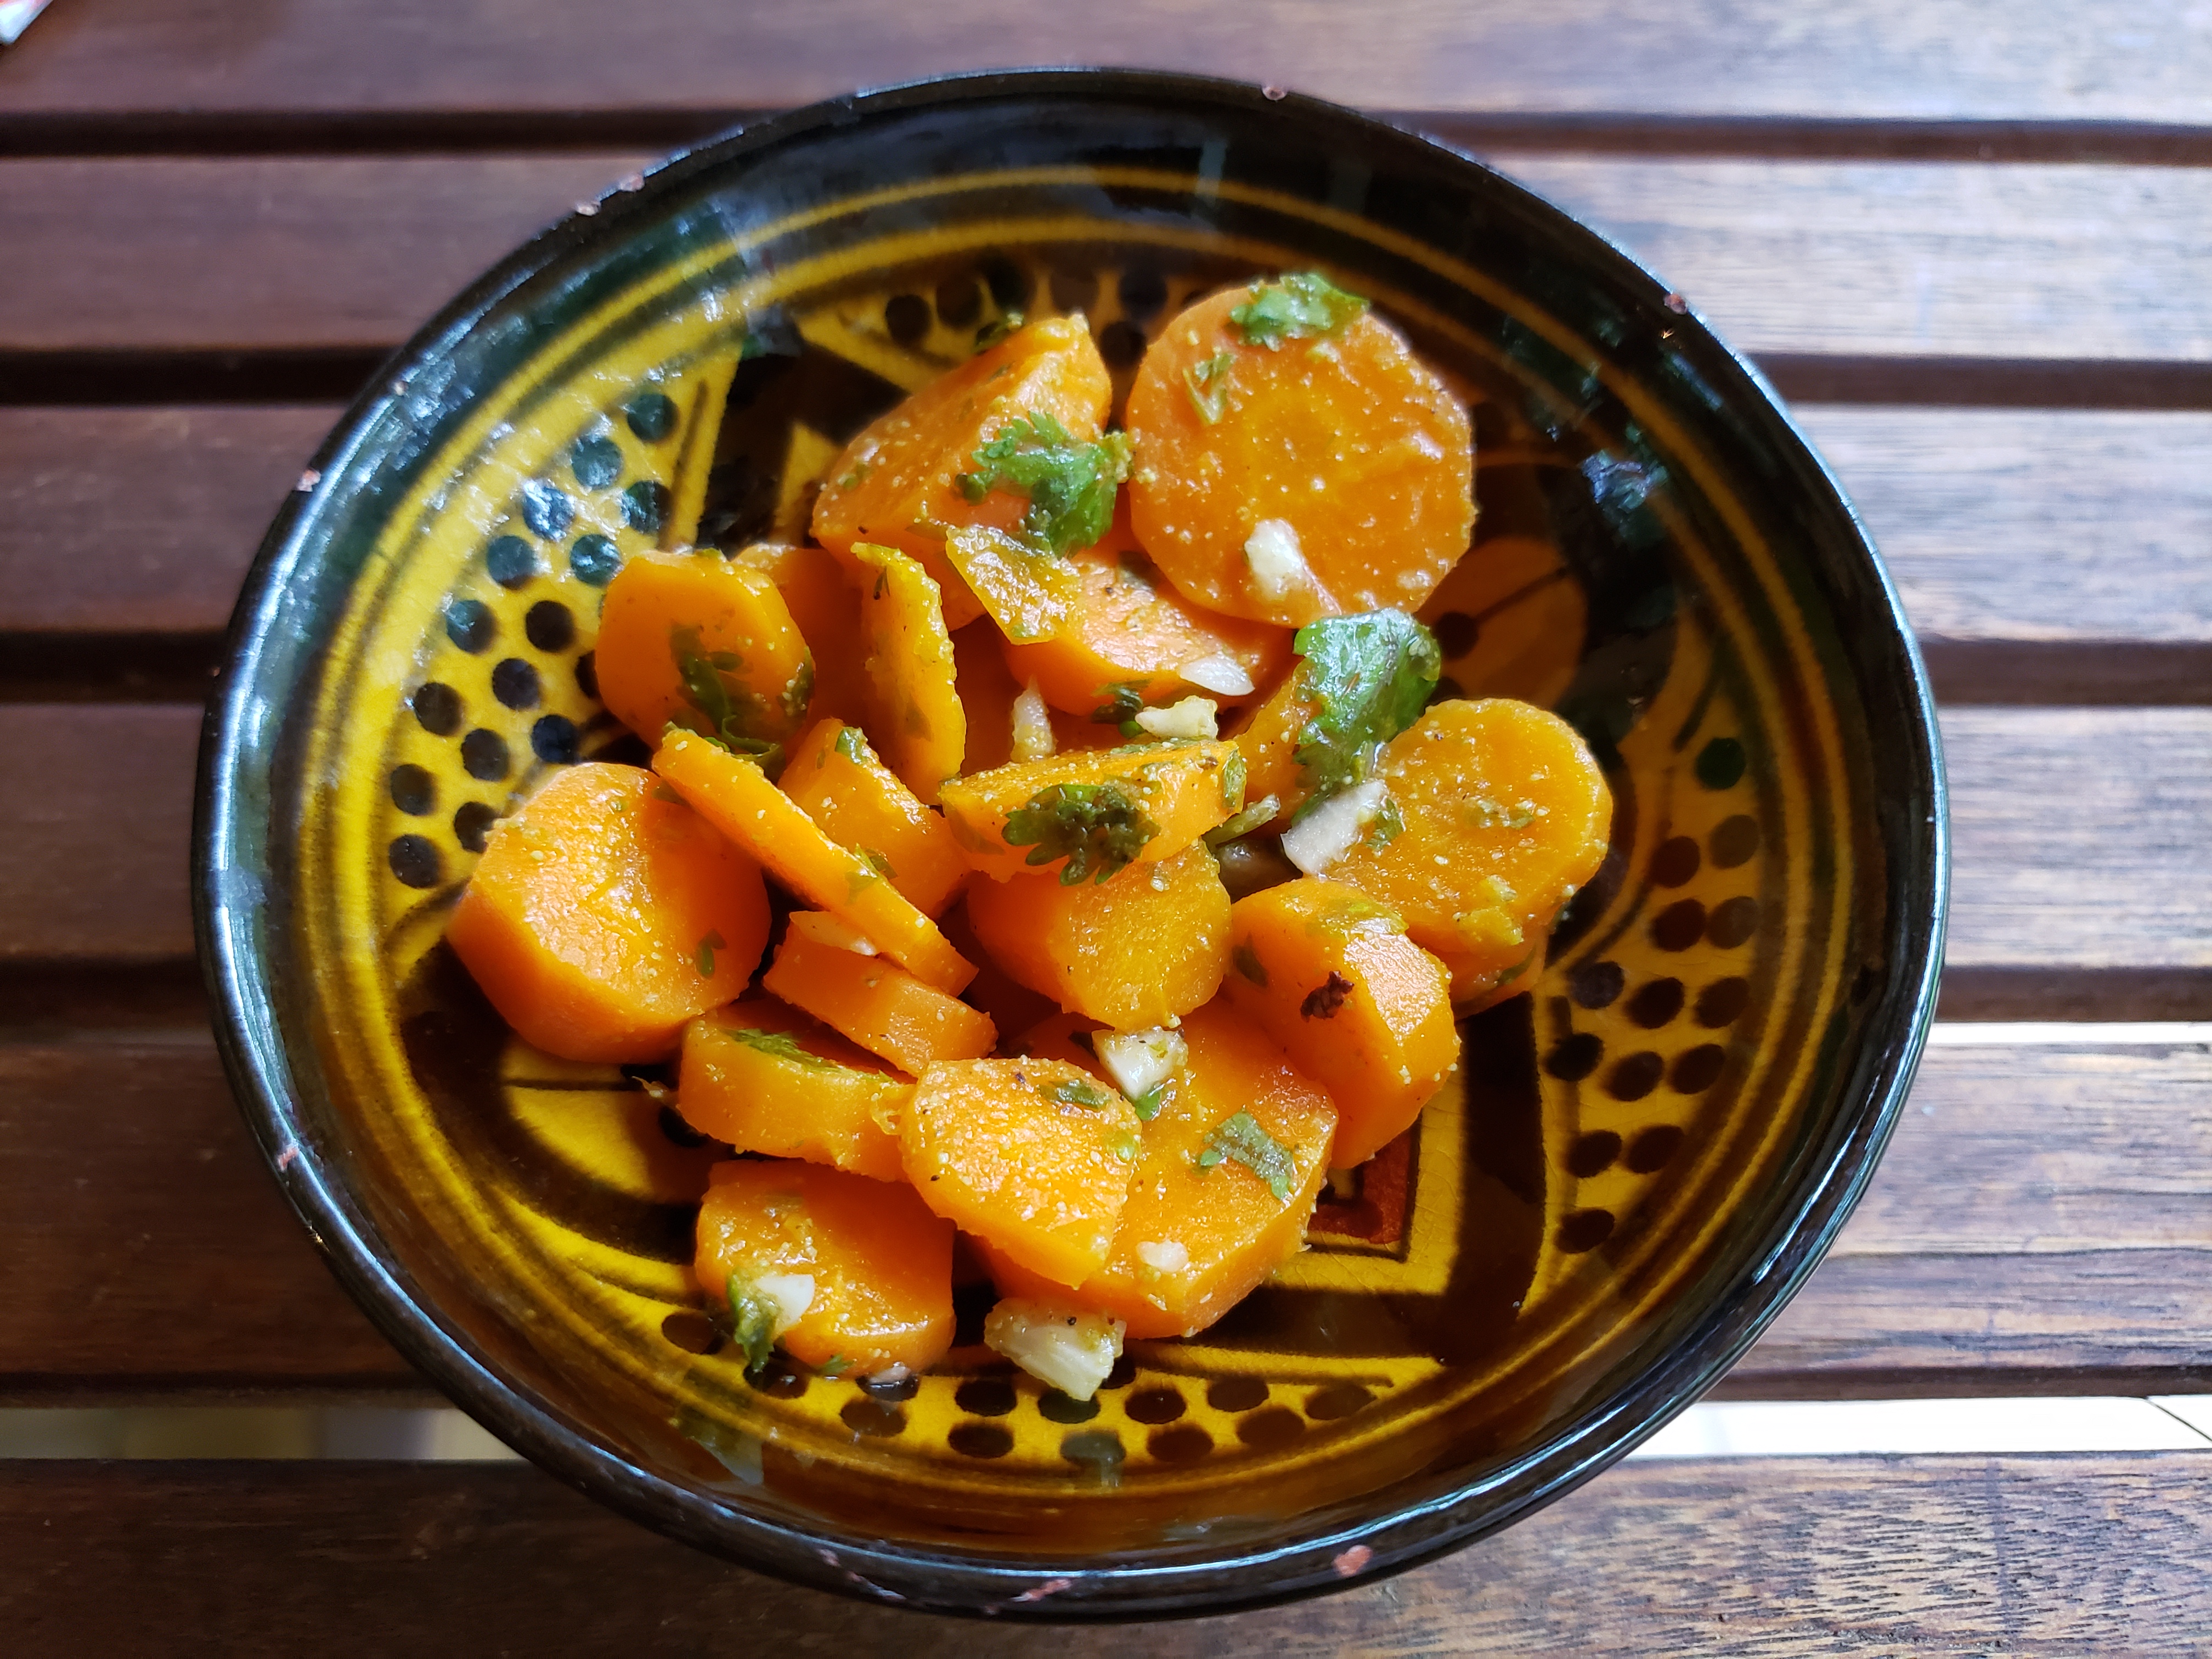 La salade de carottes à la marocaine